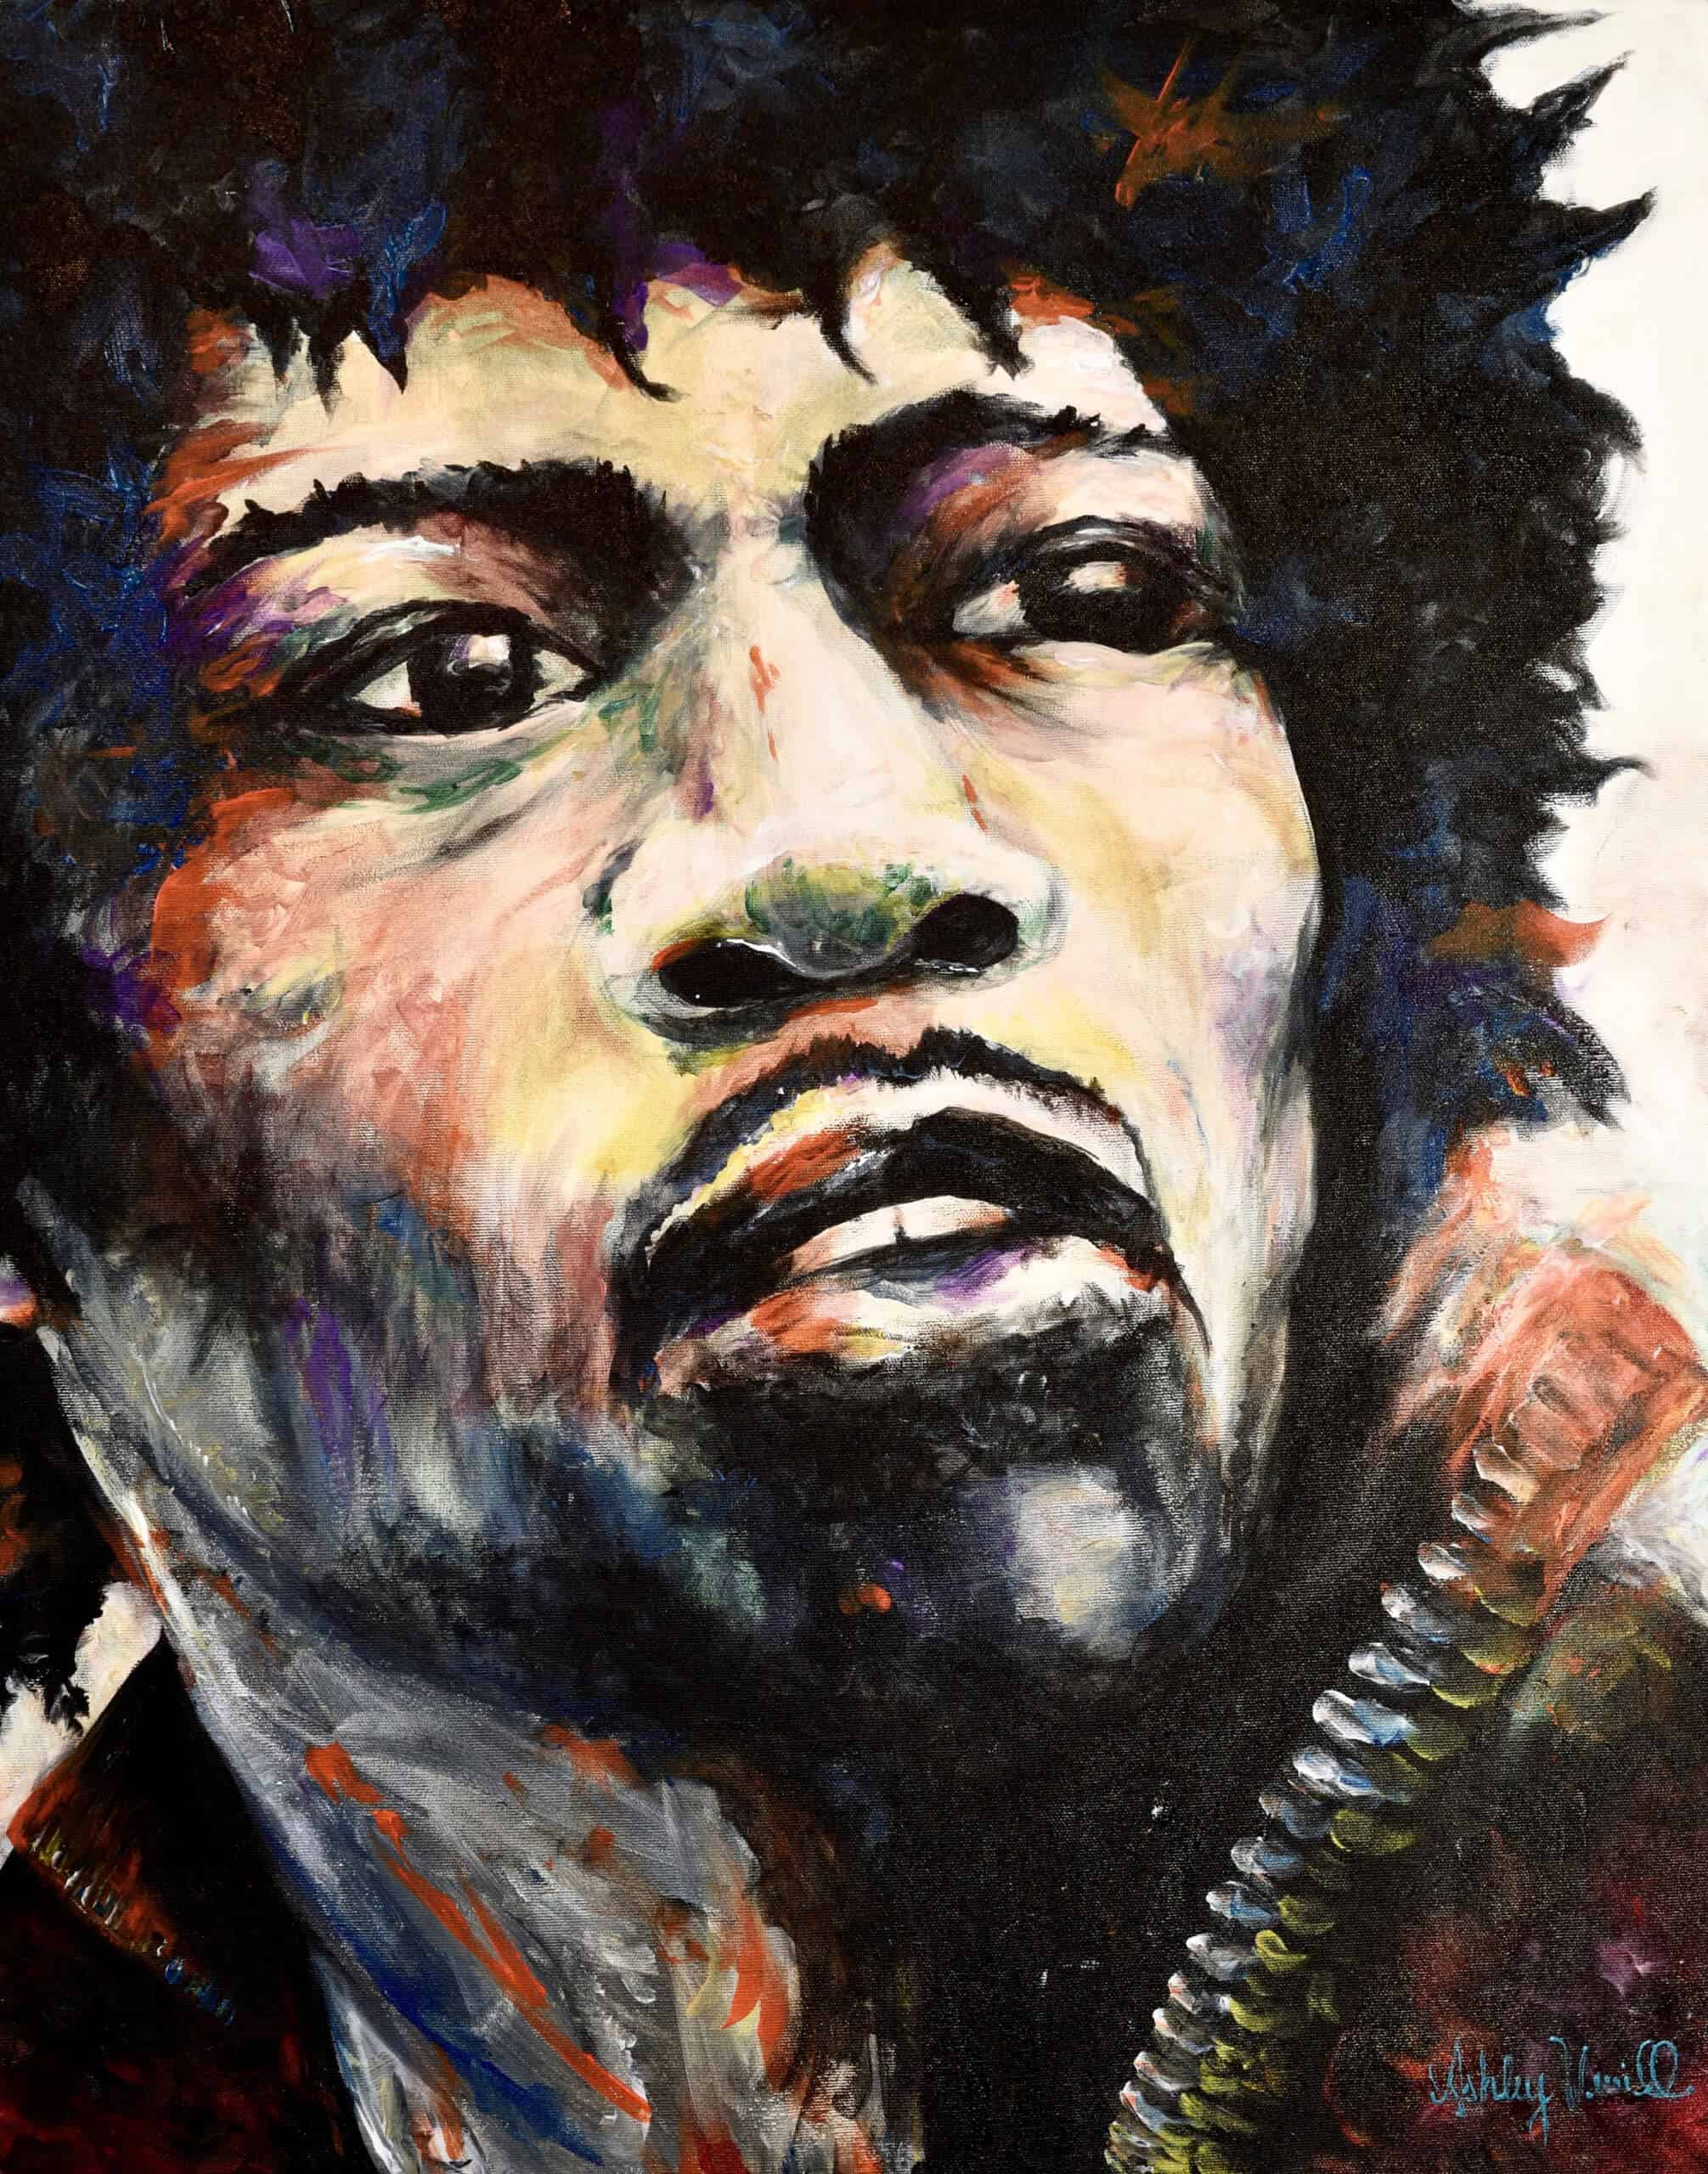 Painting of Jimi Hendrix